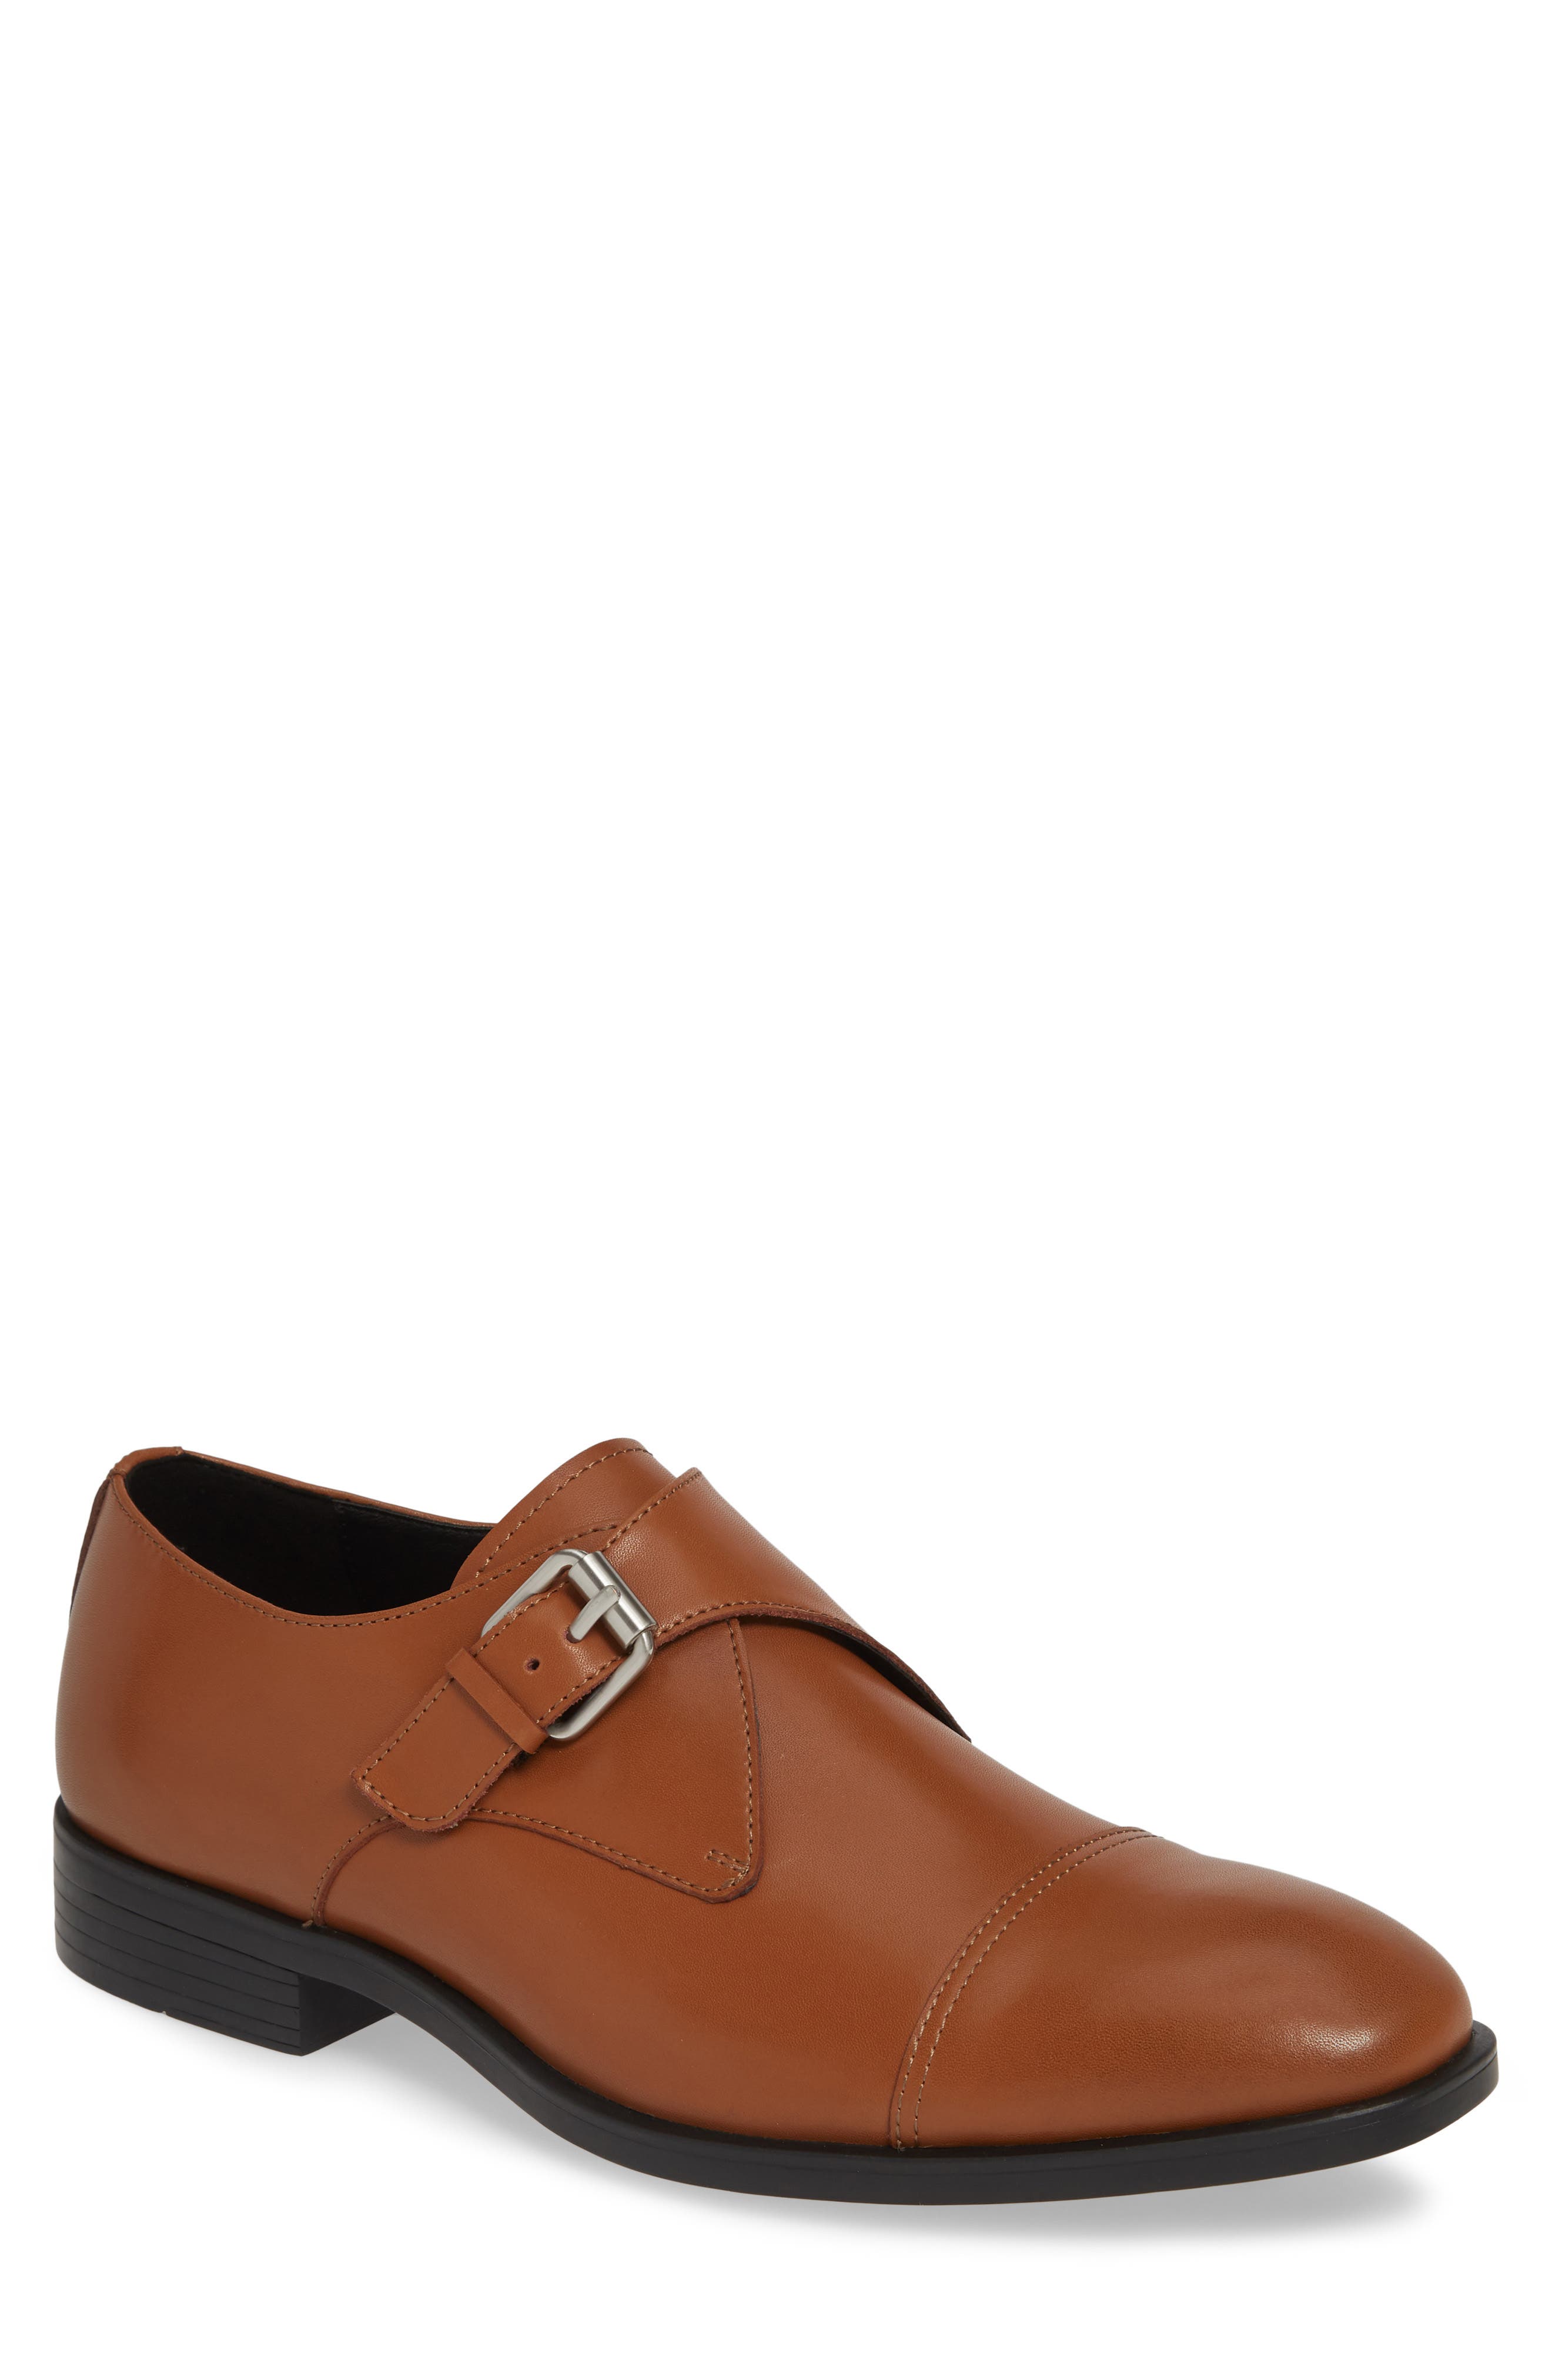 UPC 192675341196 product image for Men's Calvin Klein Channer Monk Strap Shoe, Size 9.5 M - Brown | upcitemdb.com